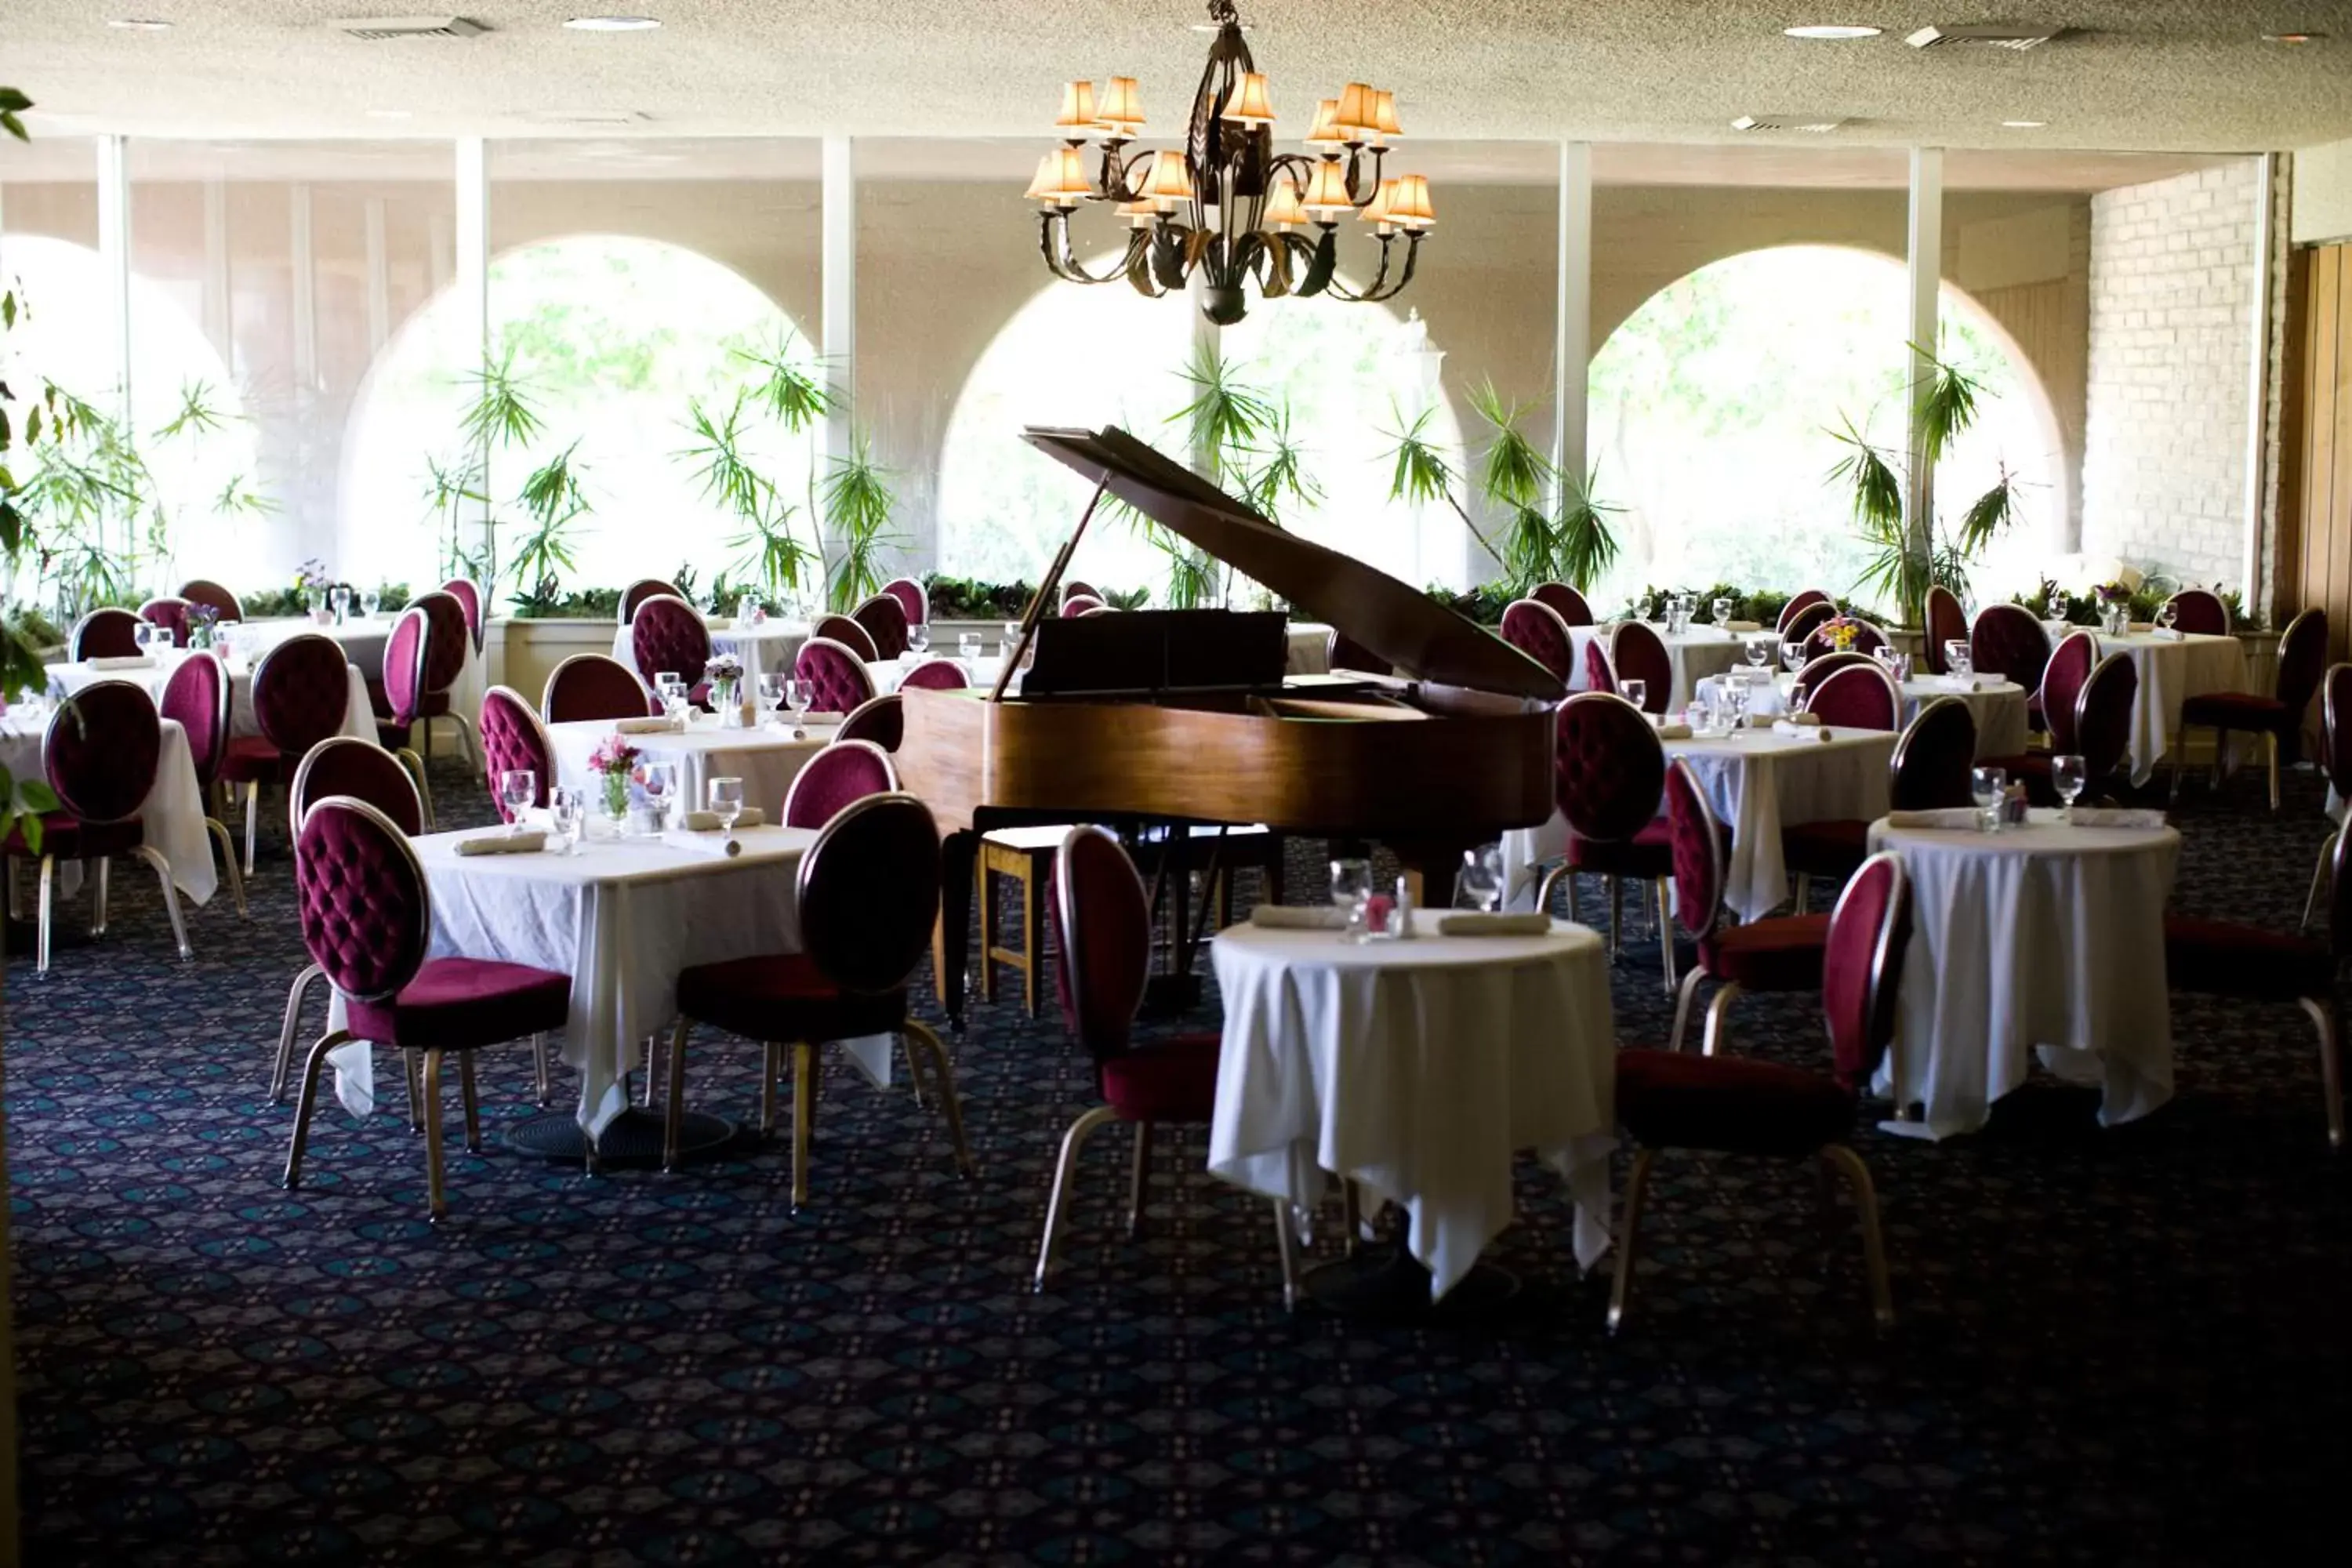 Banquet/Function facilities, Banquet Facilities in Borrego Springs Resort and Spa